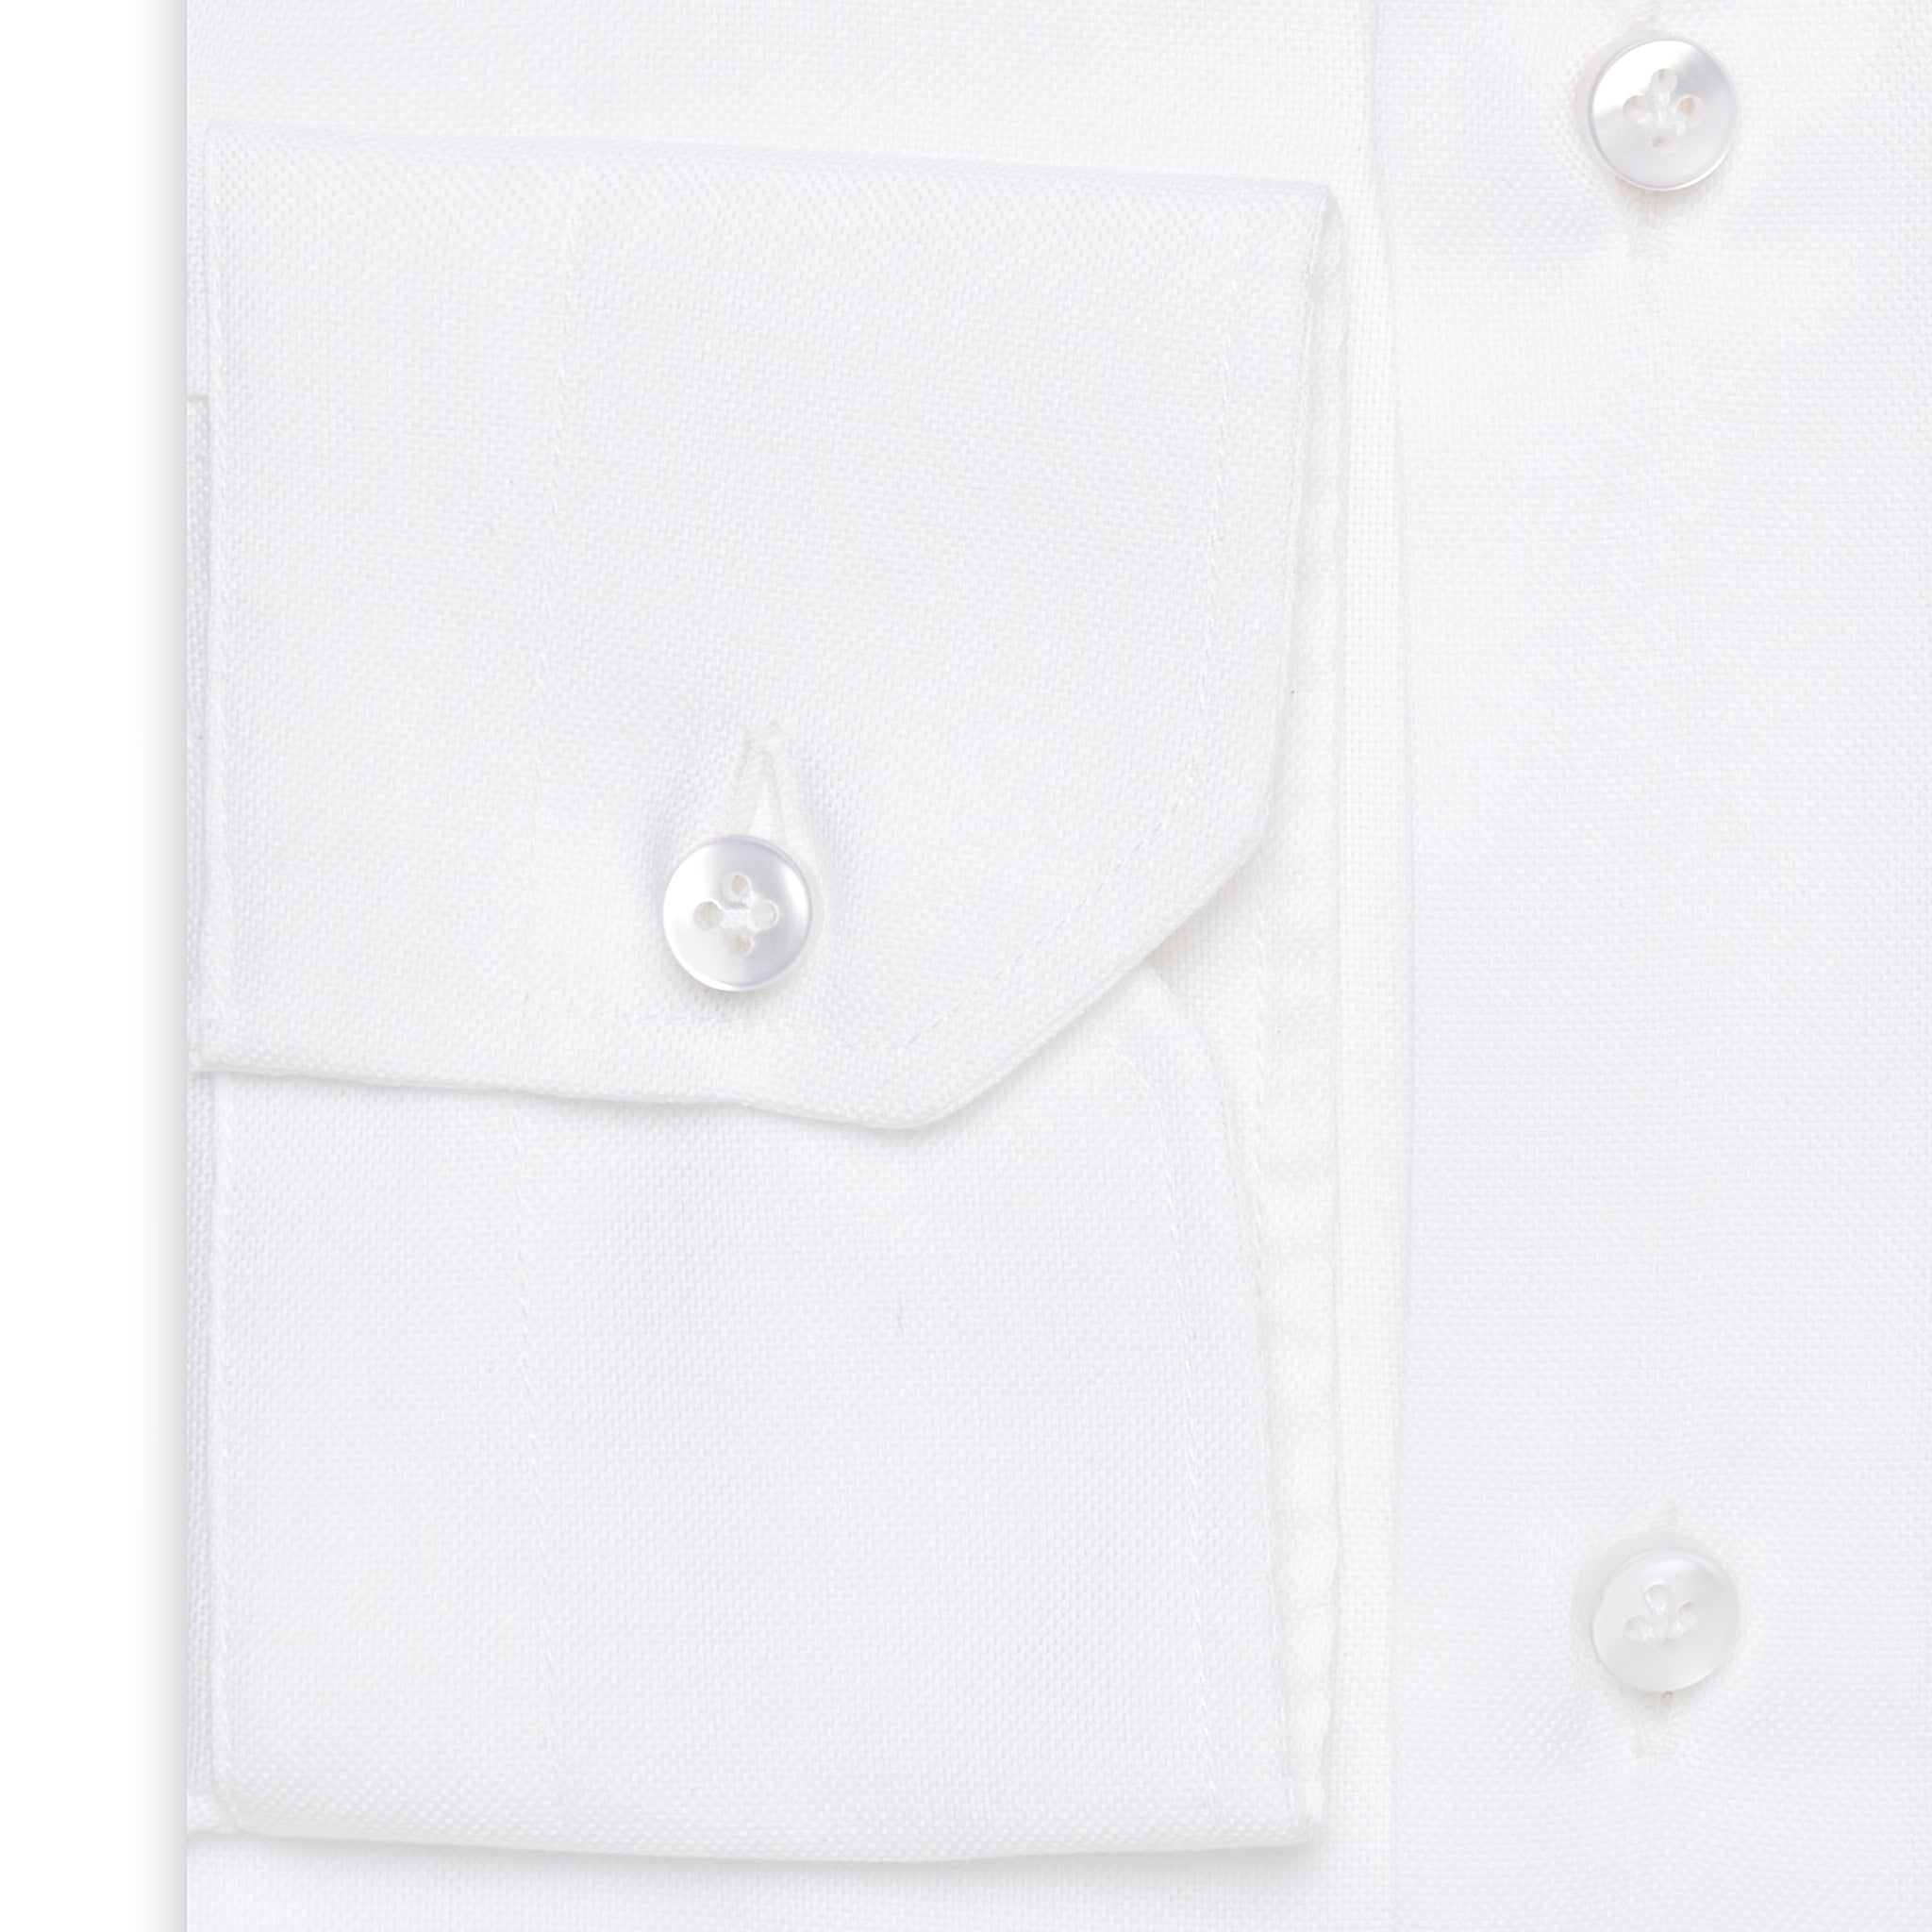 SARTORIO by KITON White Cotton Royal Oxford Dress Shirt NEW Slim Fit SARTORIO